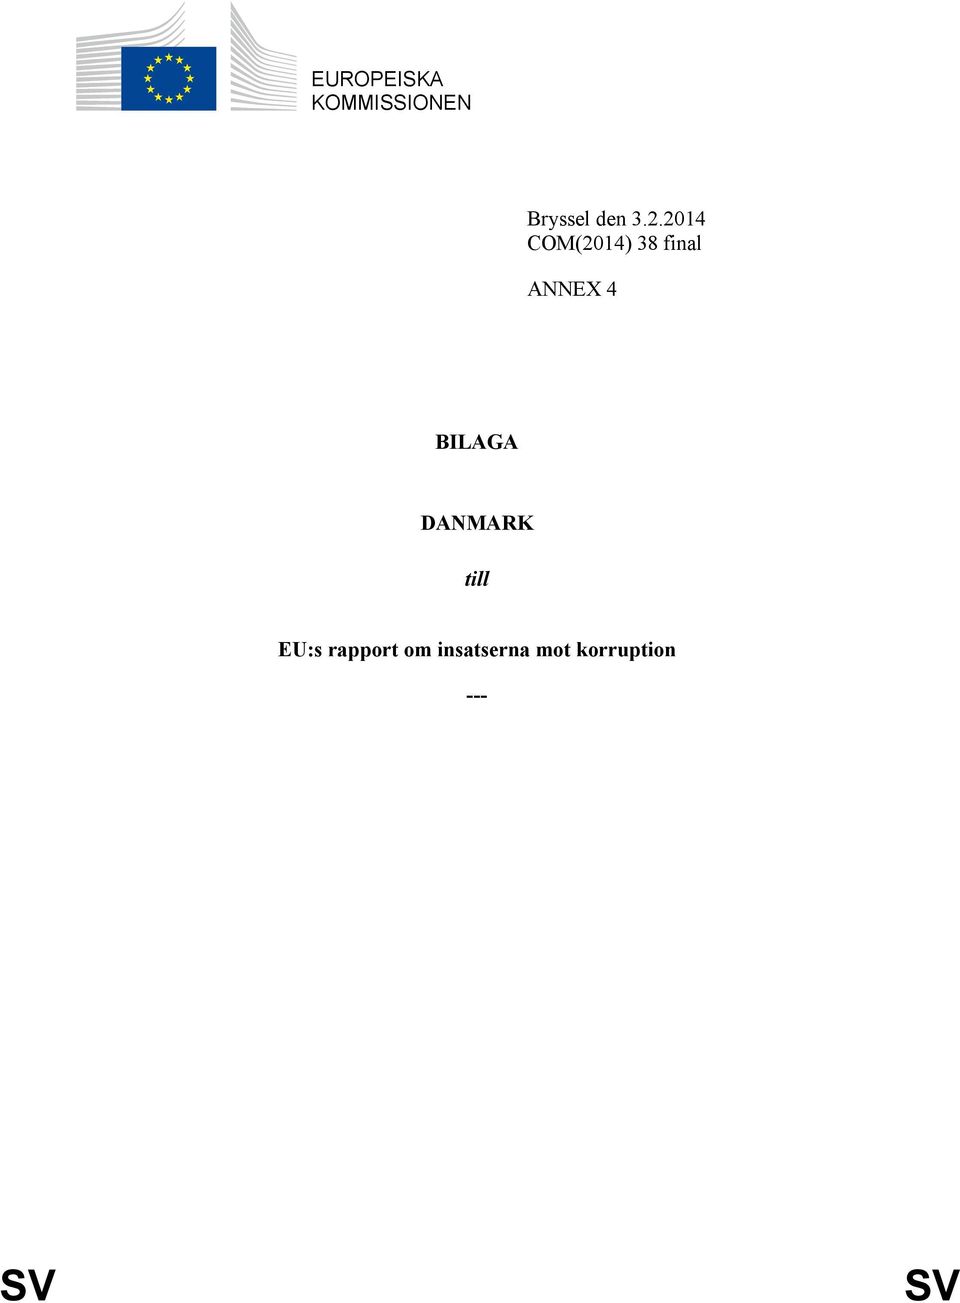 BILAGA DANMARK till EU:s rapport om